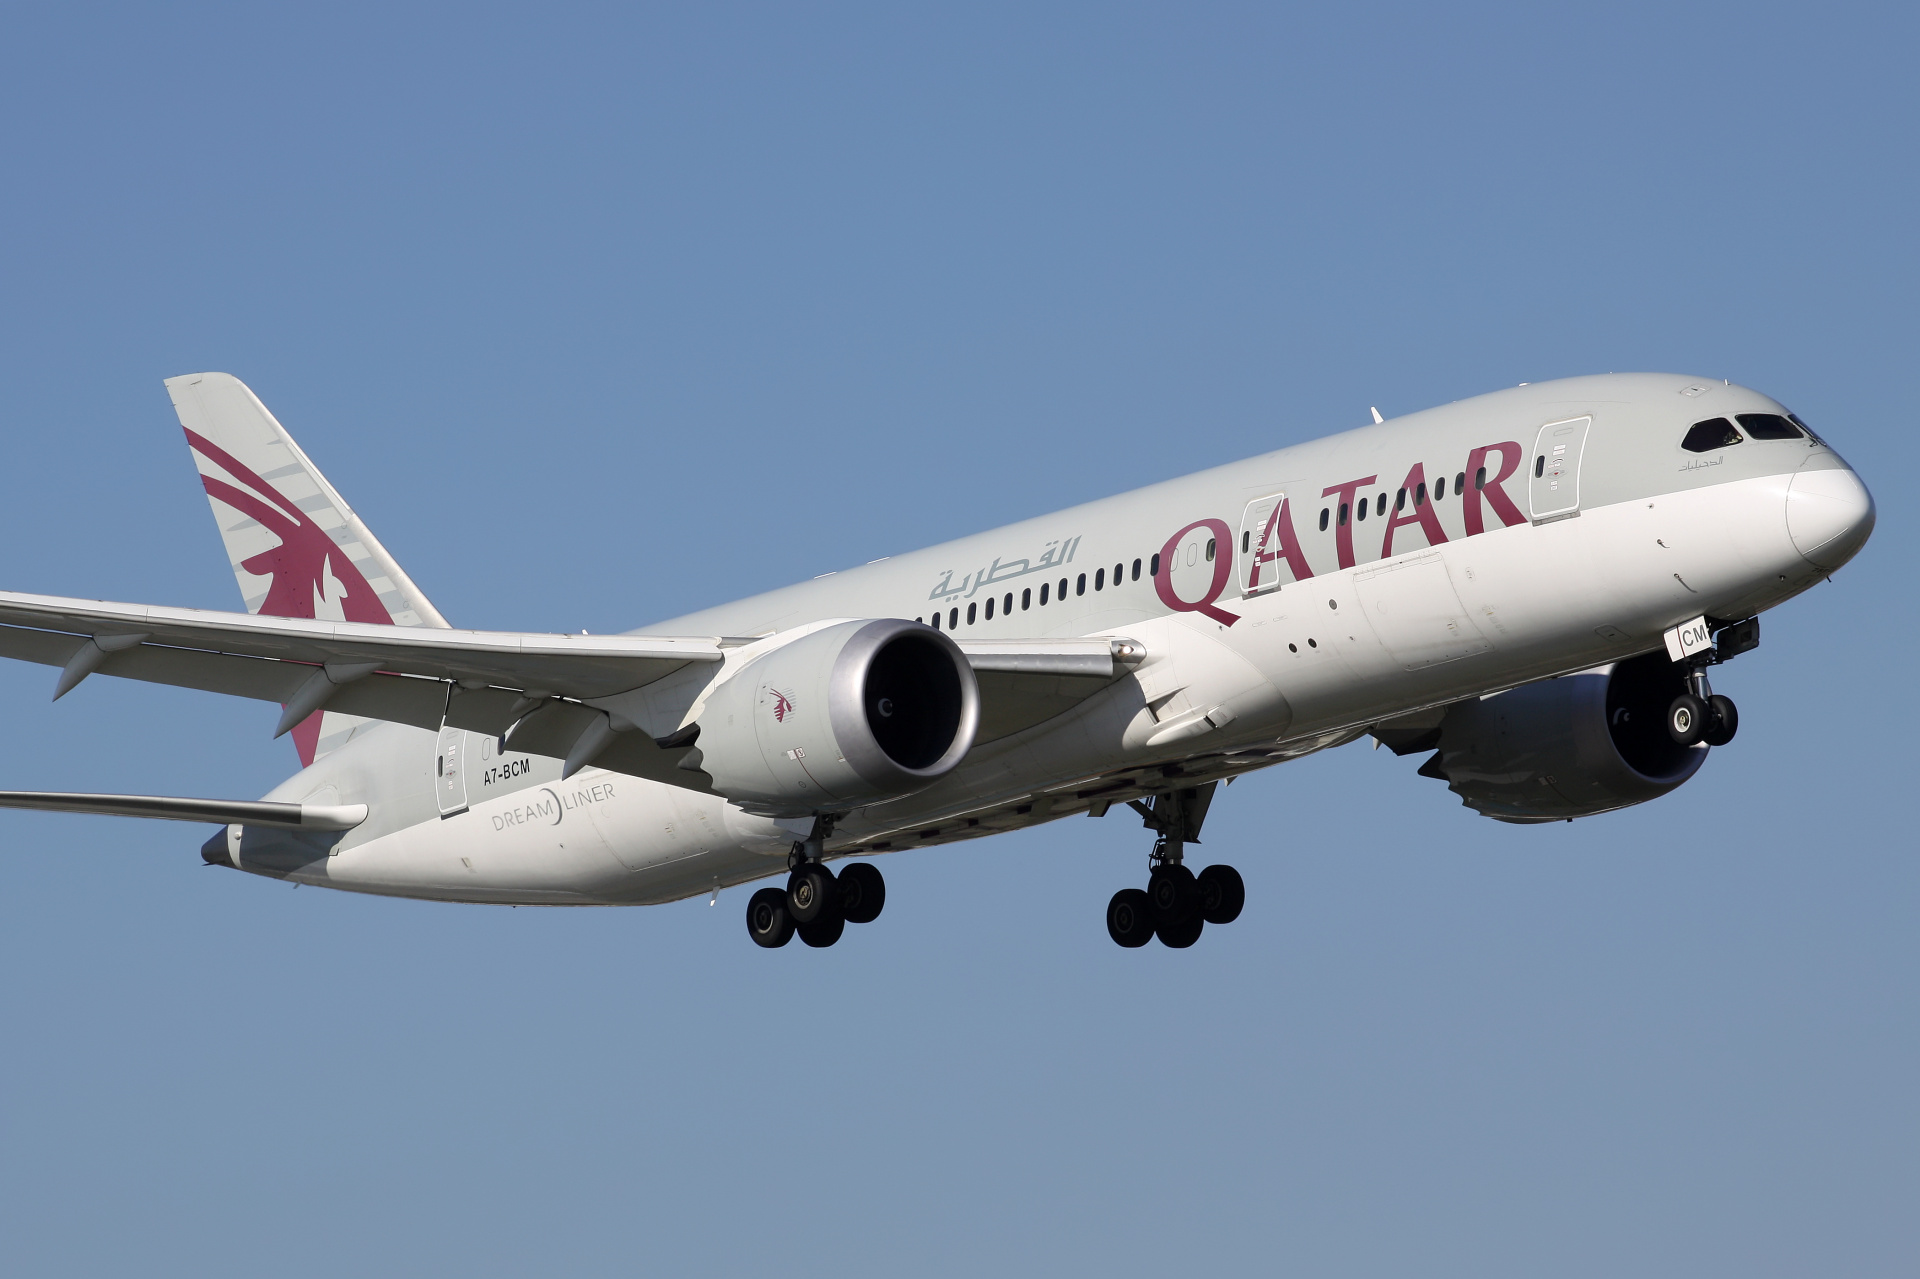 A7-BCM (Aircraft » EPWA Spotting » Boeing 787-8 Dreamliner » Qatar Airways)